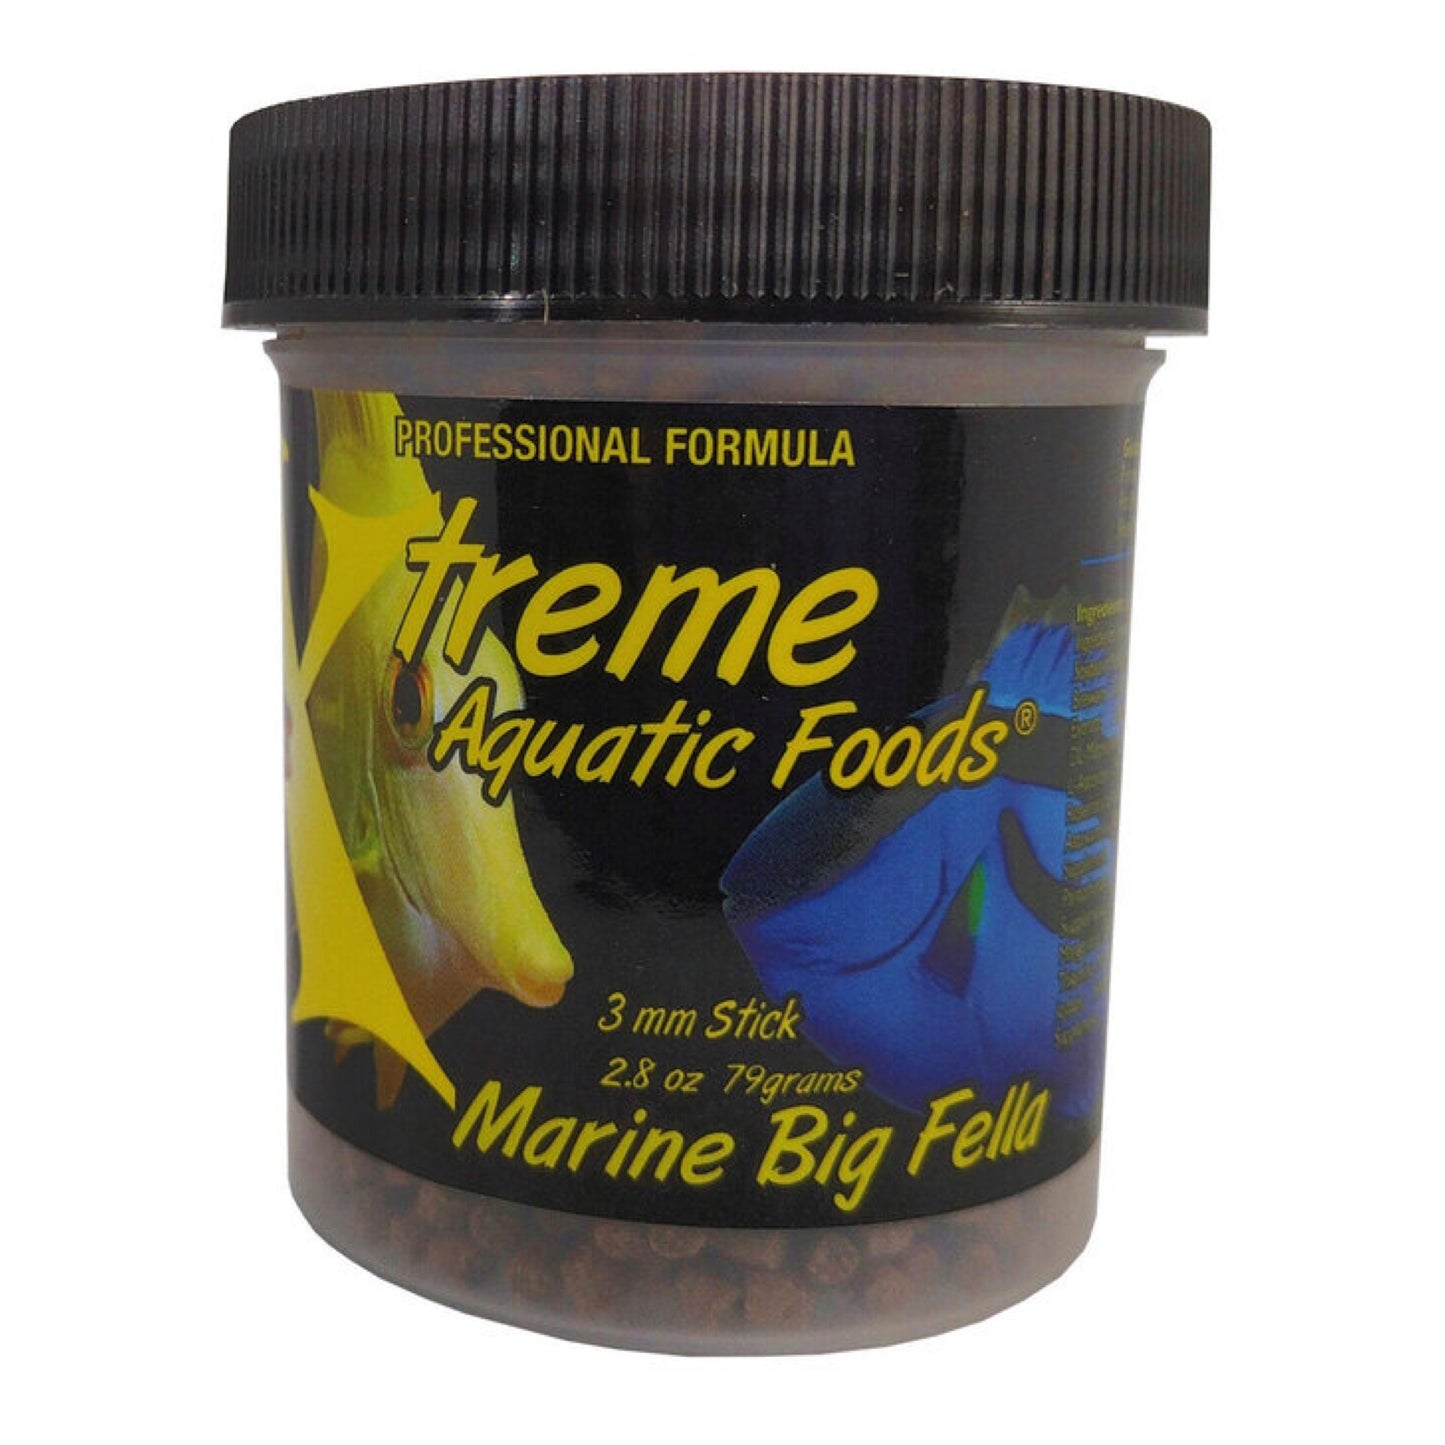 Xtreme Aquatic Foods - Marine Big Fella